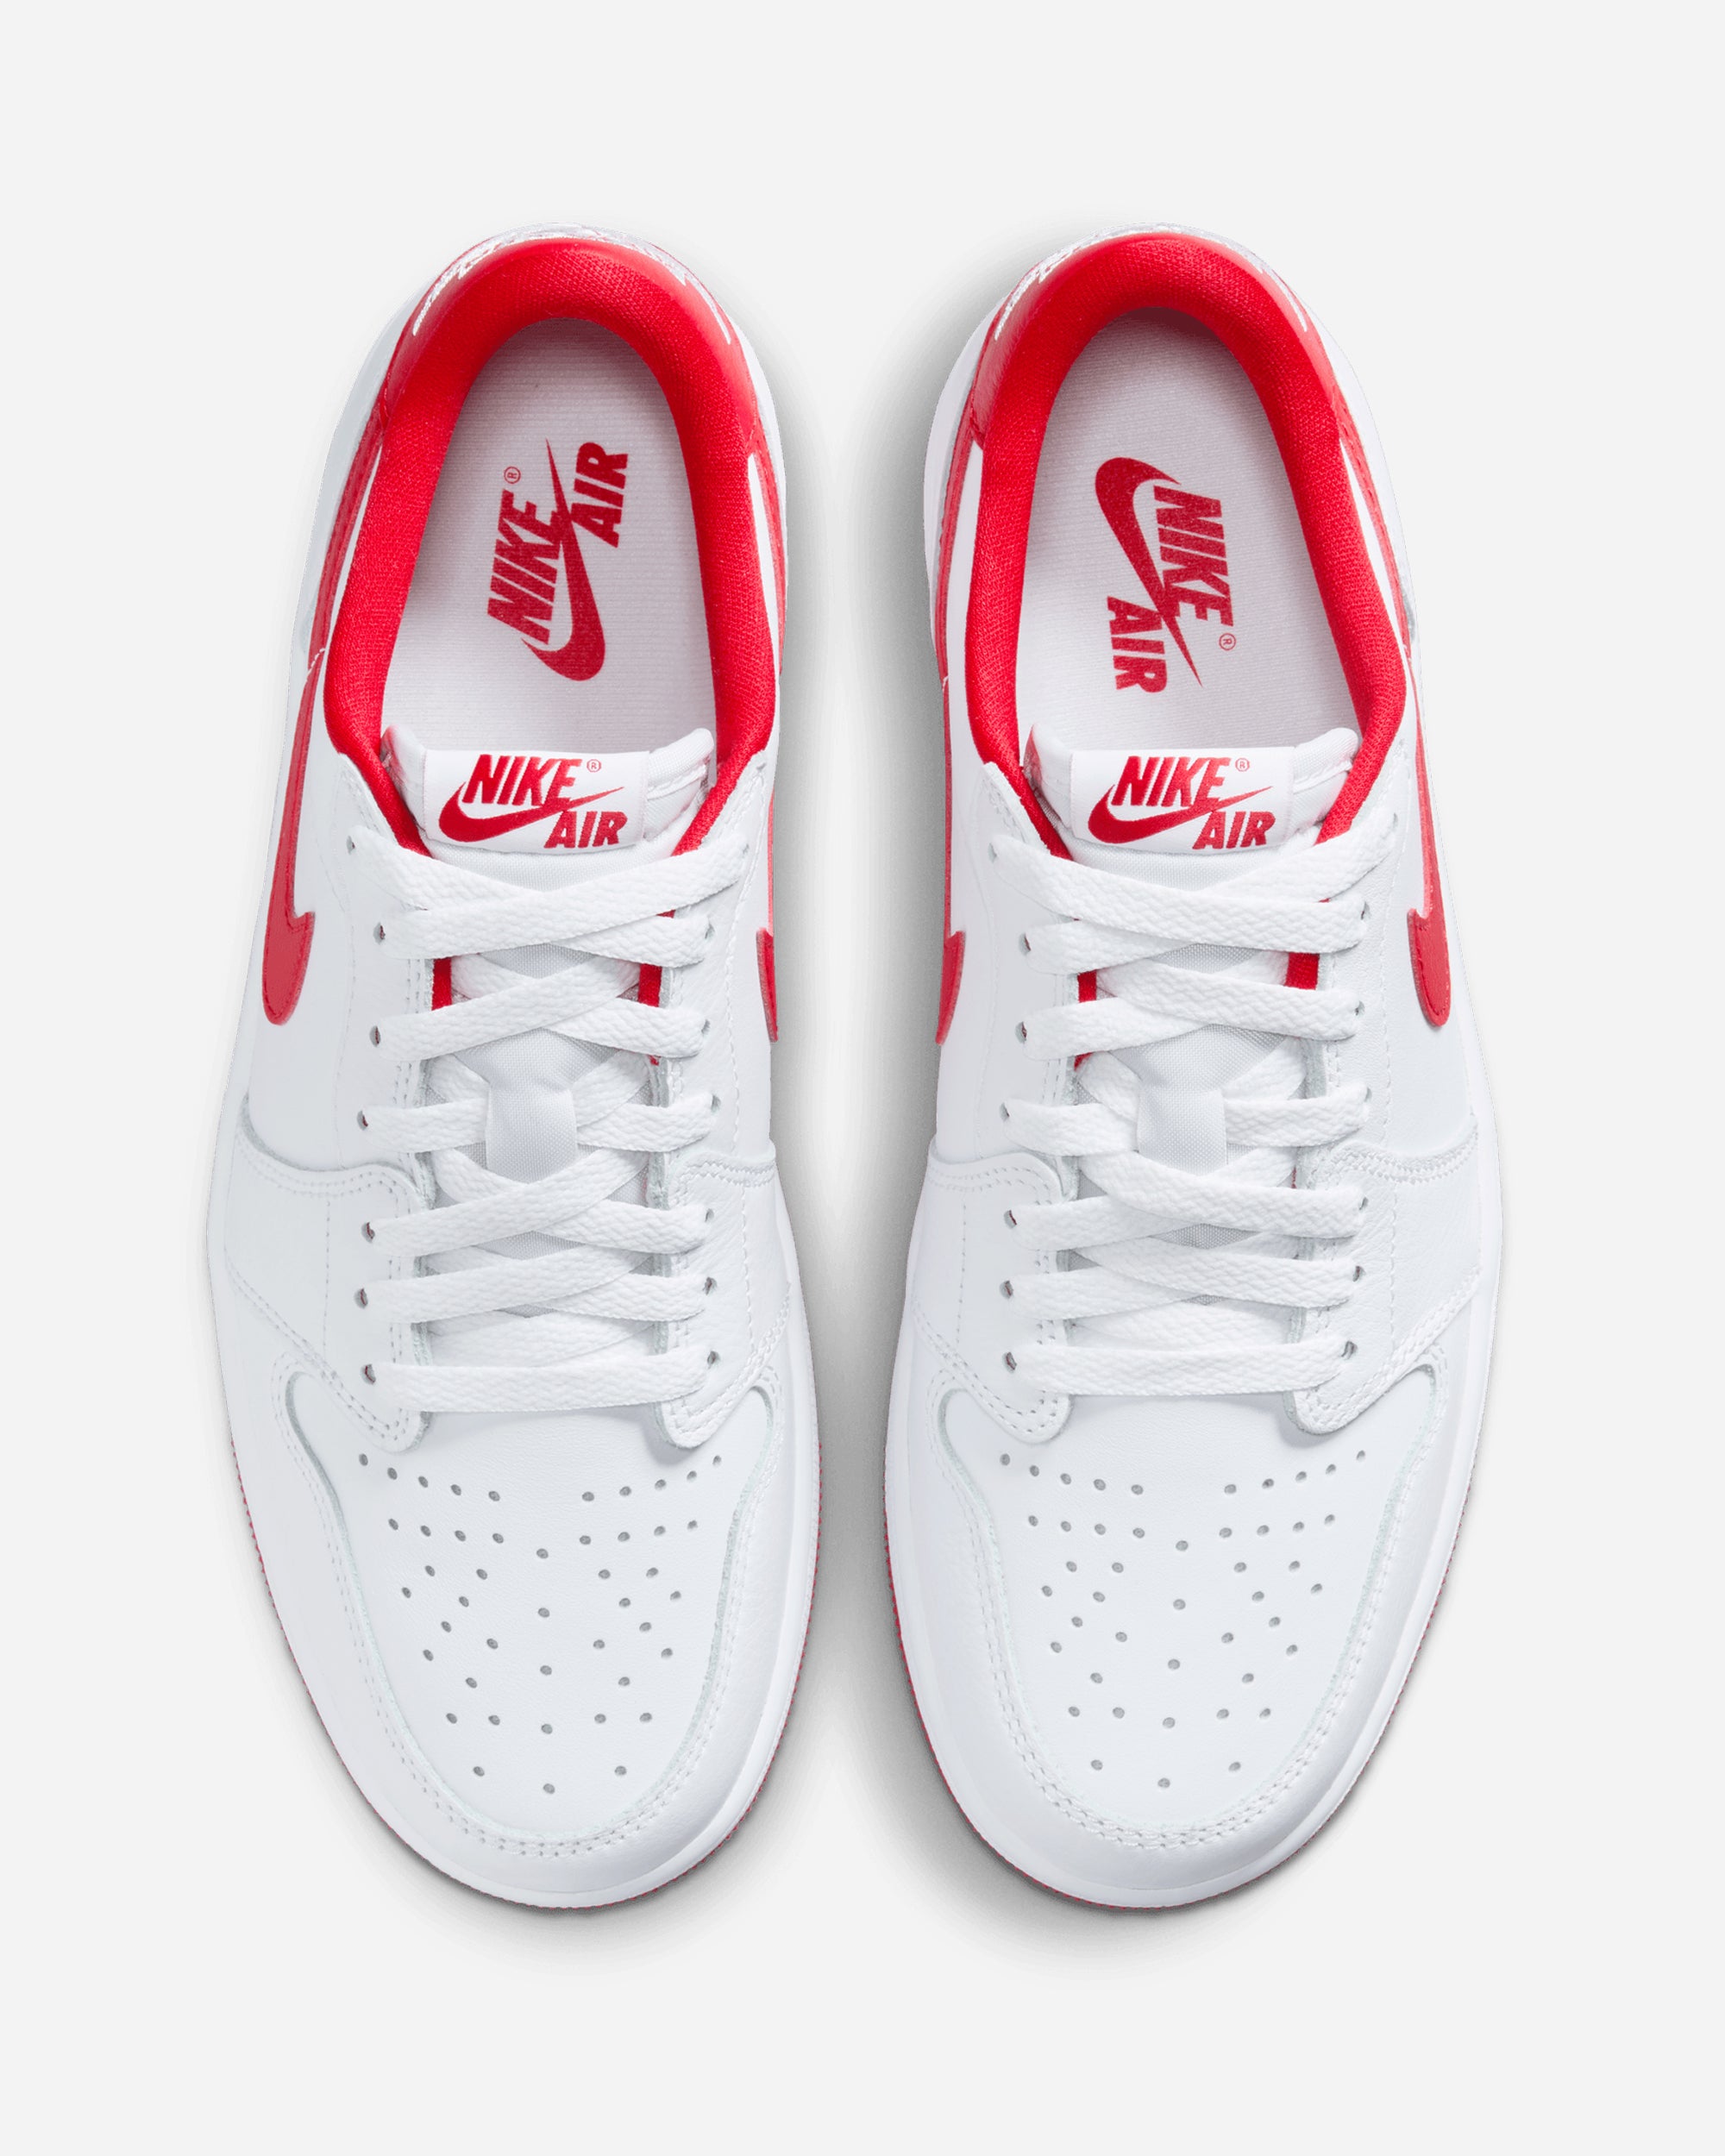 Jordan Brand Air Jordan 1 Retro Low 'University Red' WHITE/UNIVERSITY RED-WHITE CZ0790-161